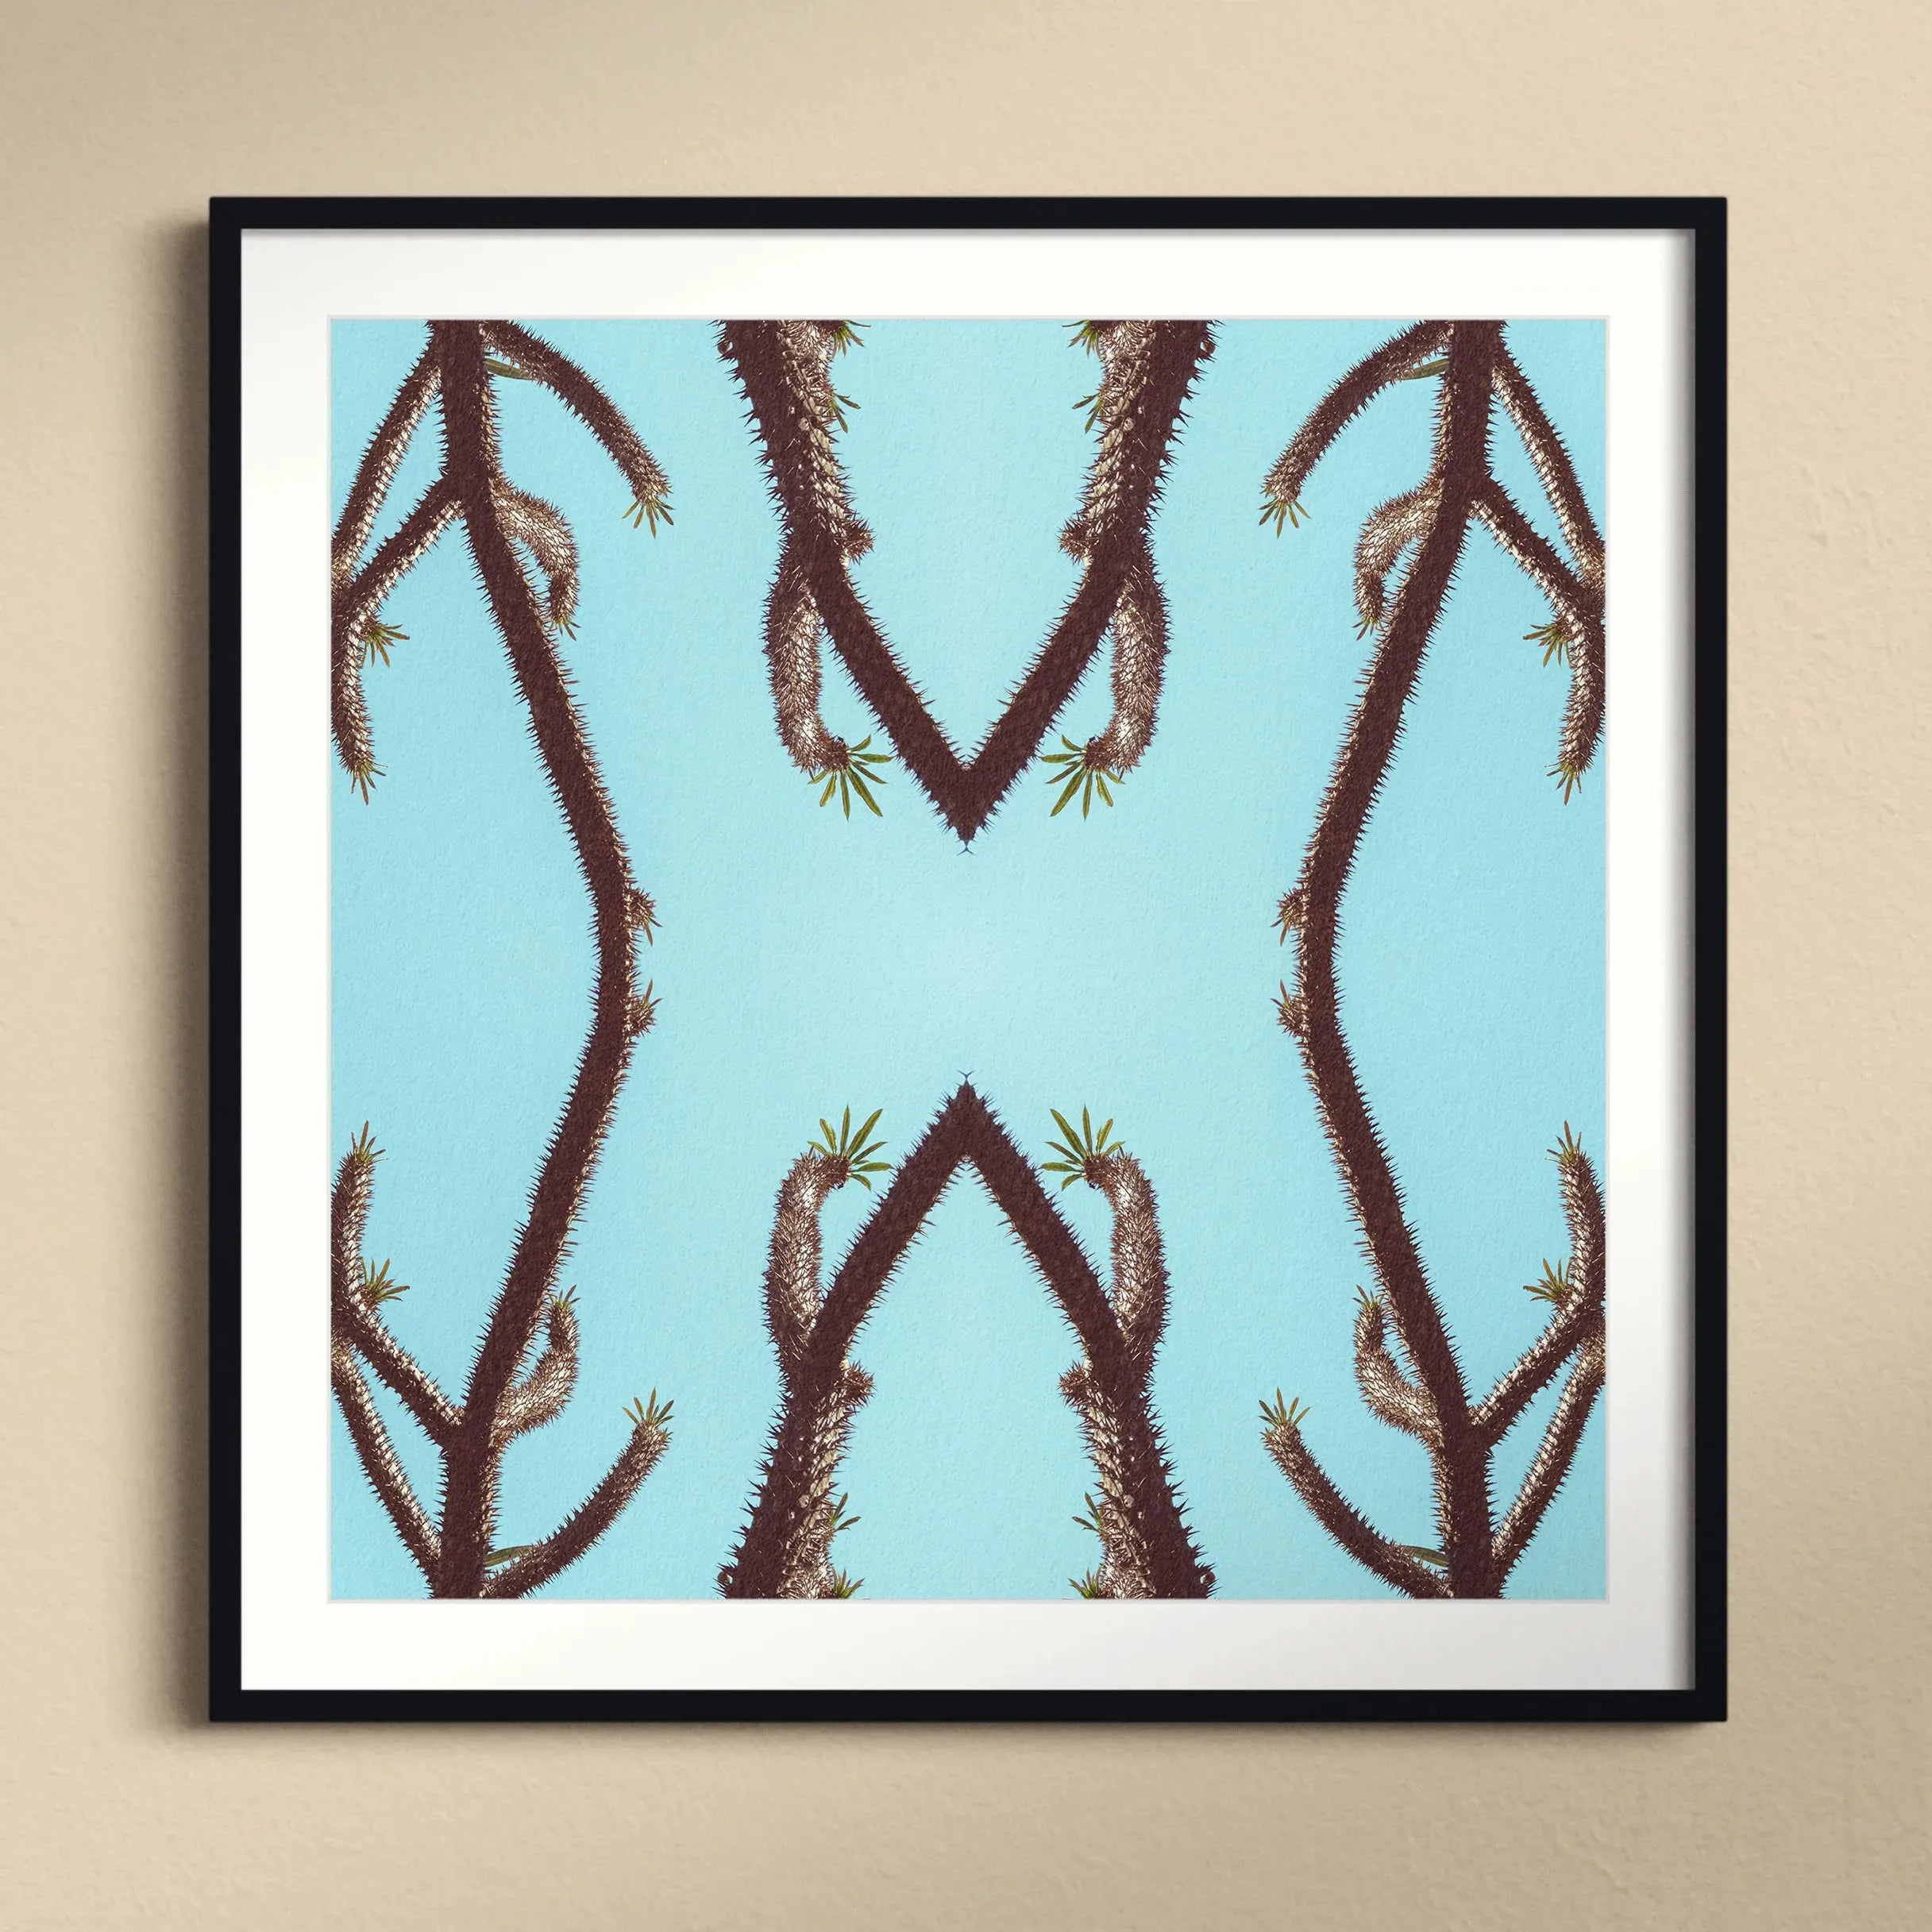 Chain Reaction - Trippy Cactus Succulent Framed Art Print - Posters Prints & Visual Artwork - Aesthetic Art